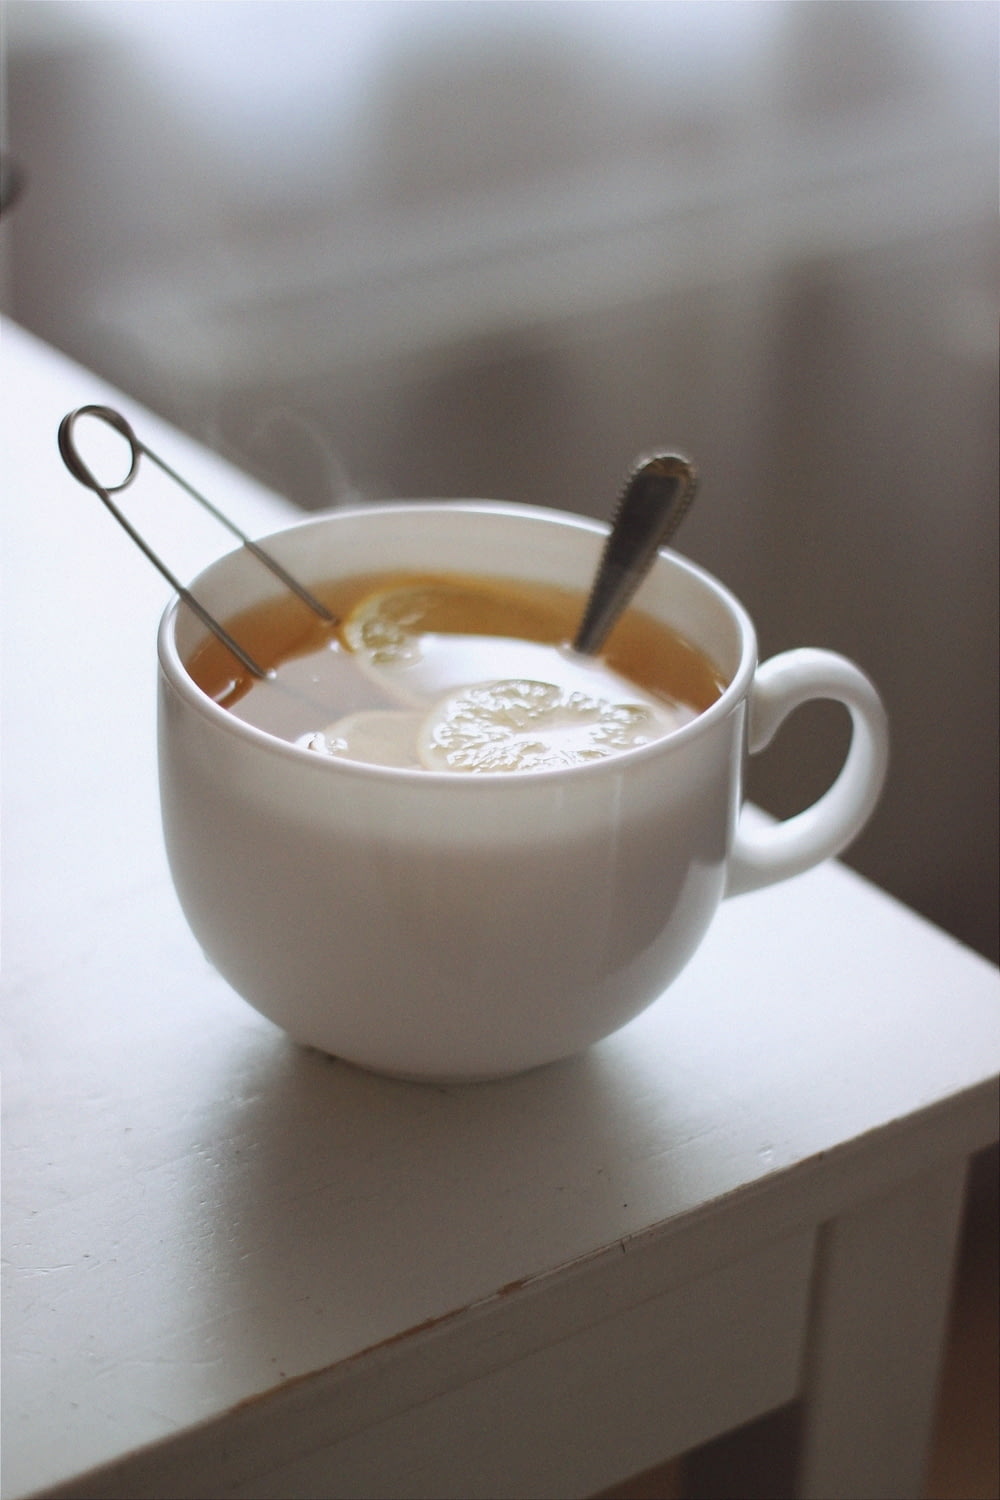 white ceramic mug with coffee